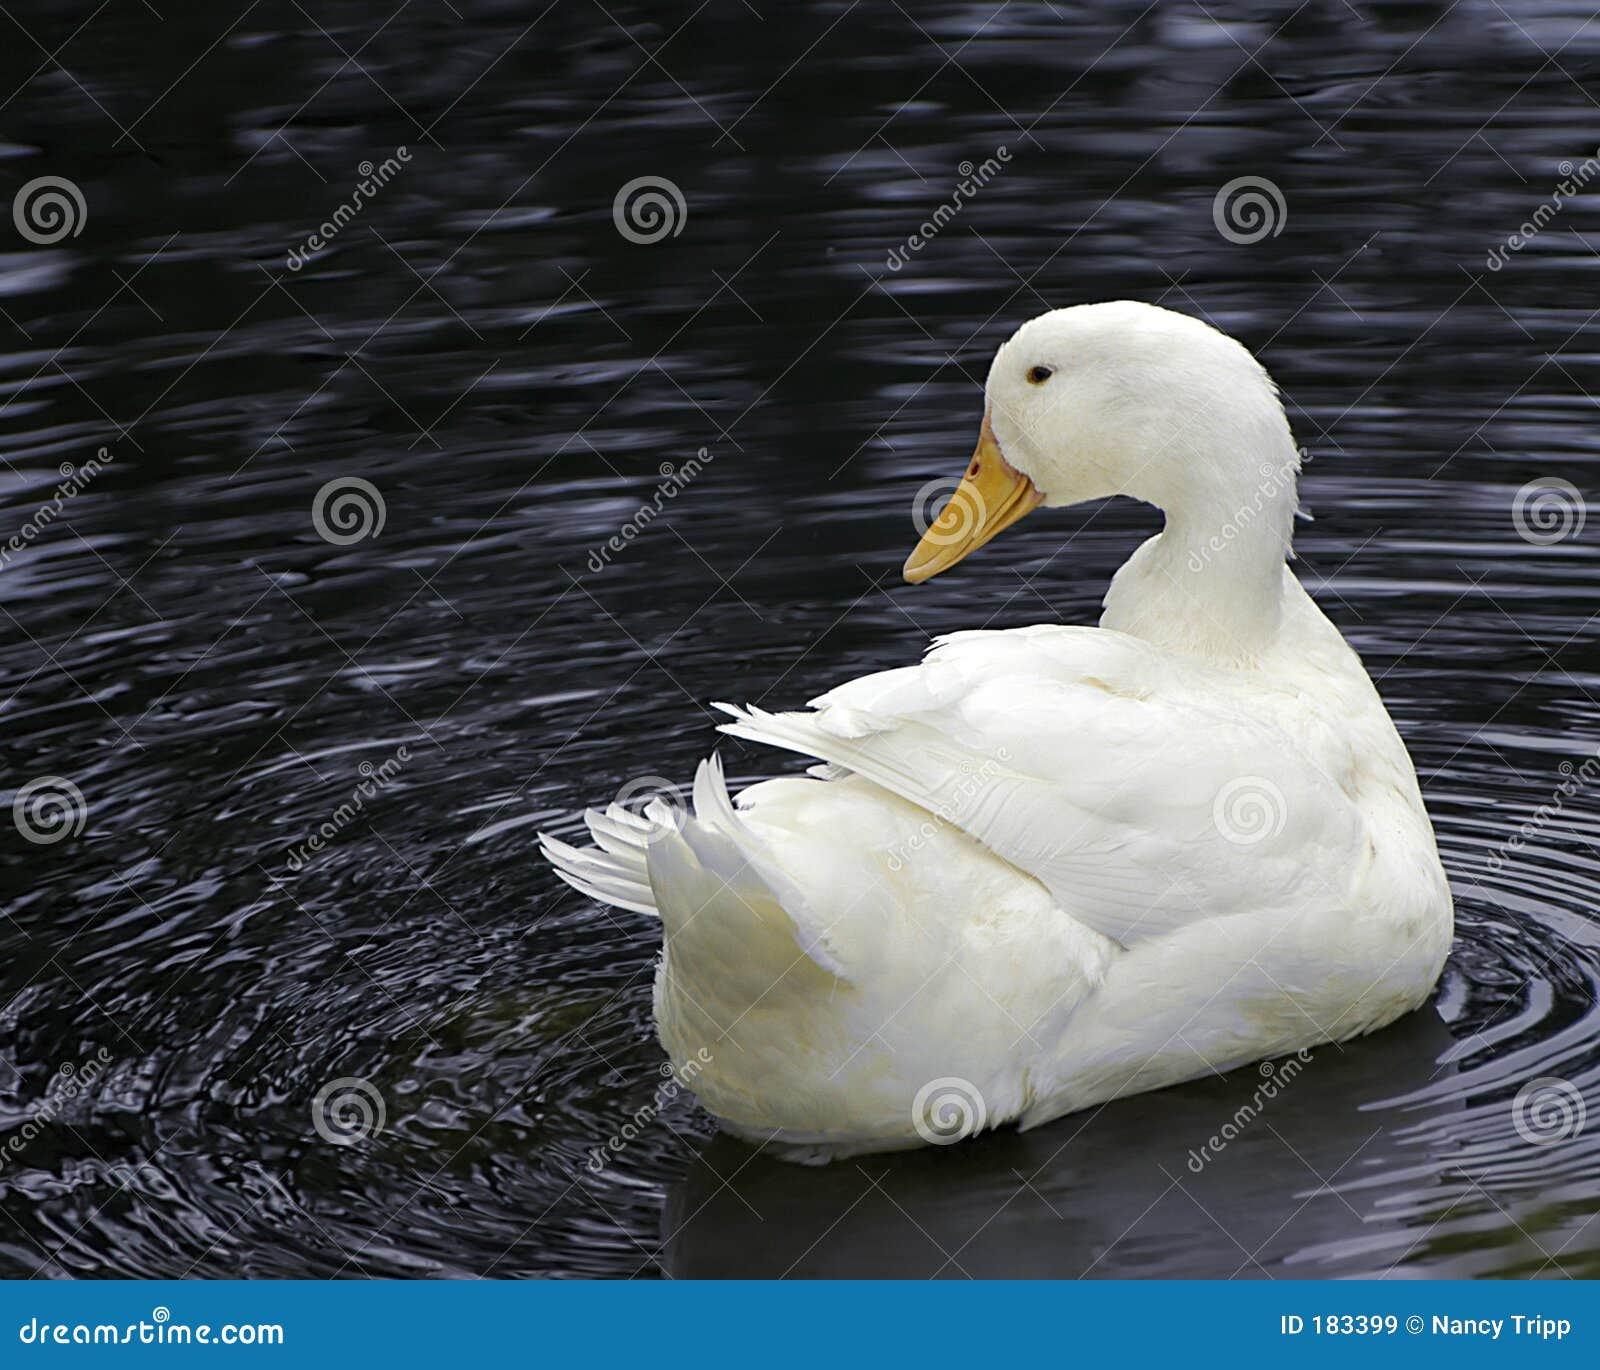 white pekin duck